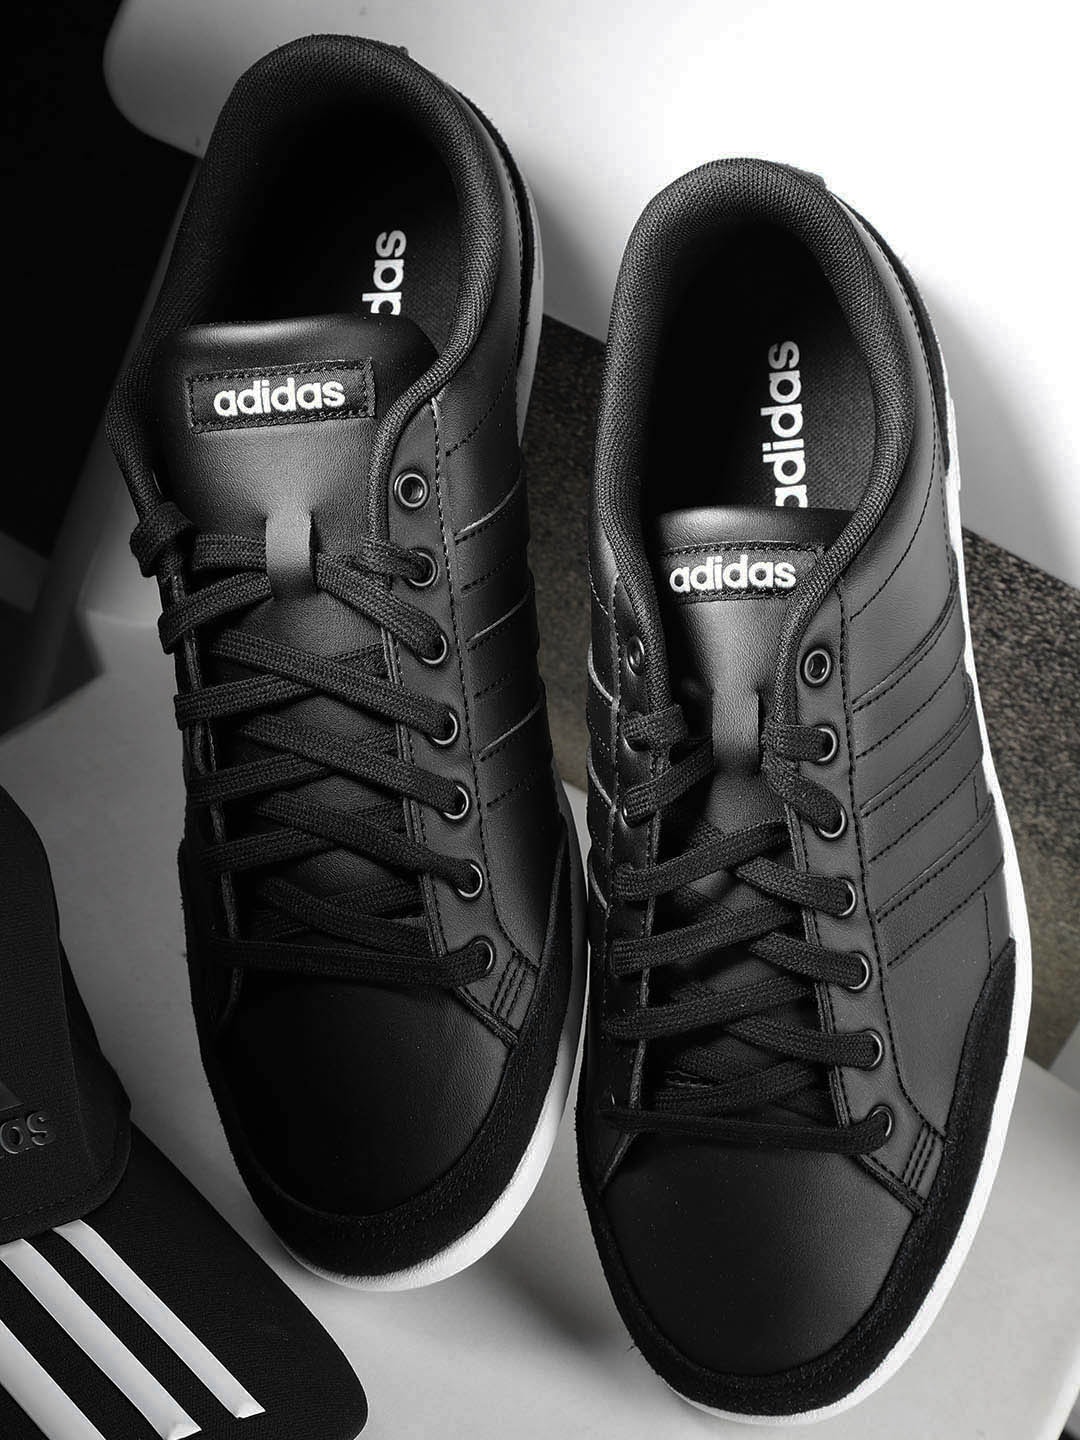 All Black Adidas Shoes : Men's shoes sneakers adidas Originals Tubular